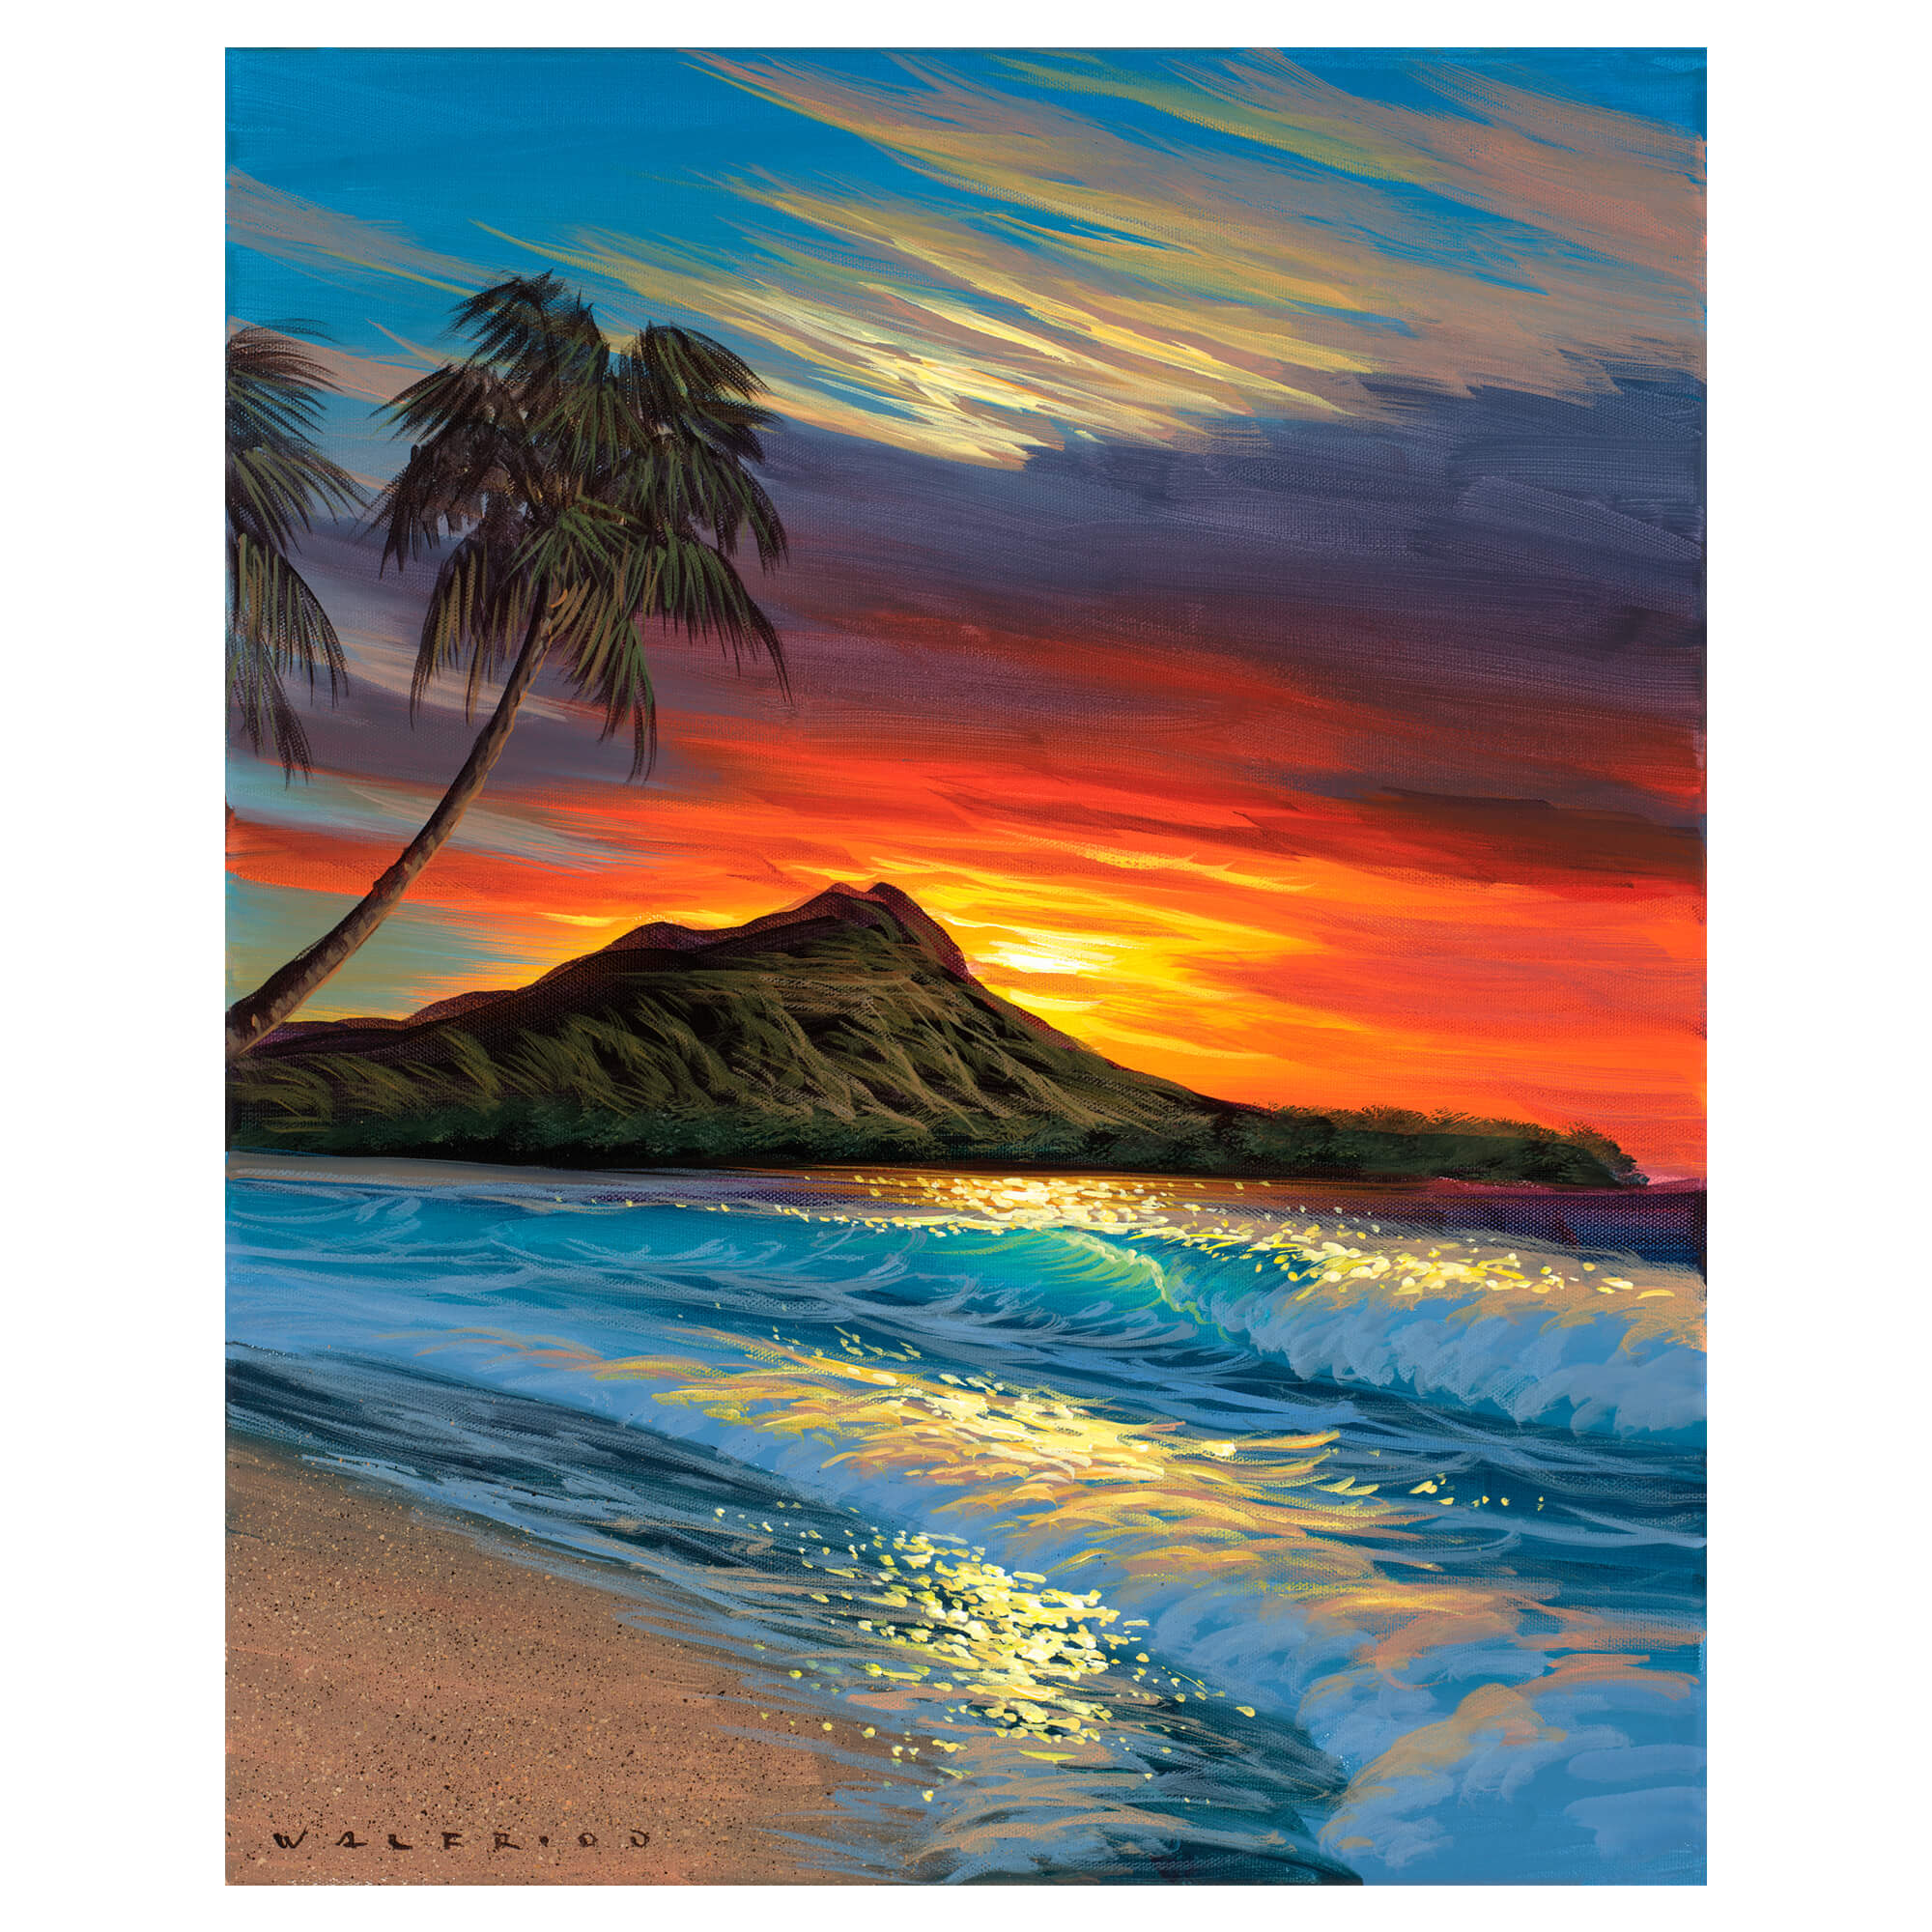 Vibrant colored sky over Diamond Head by Hawaii artist Walfrido Garcia